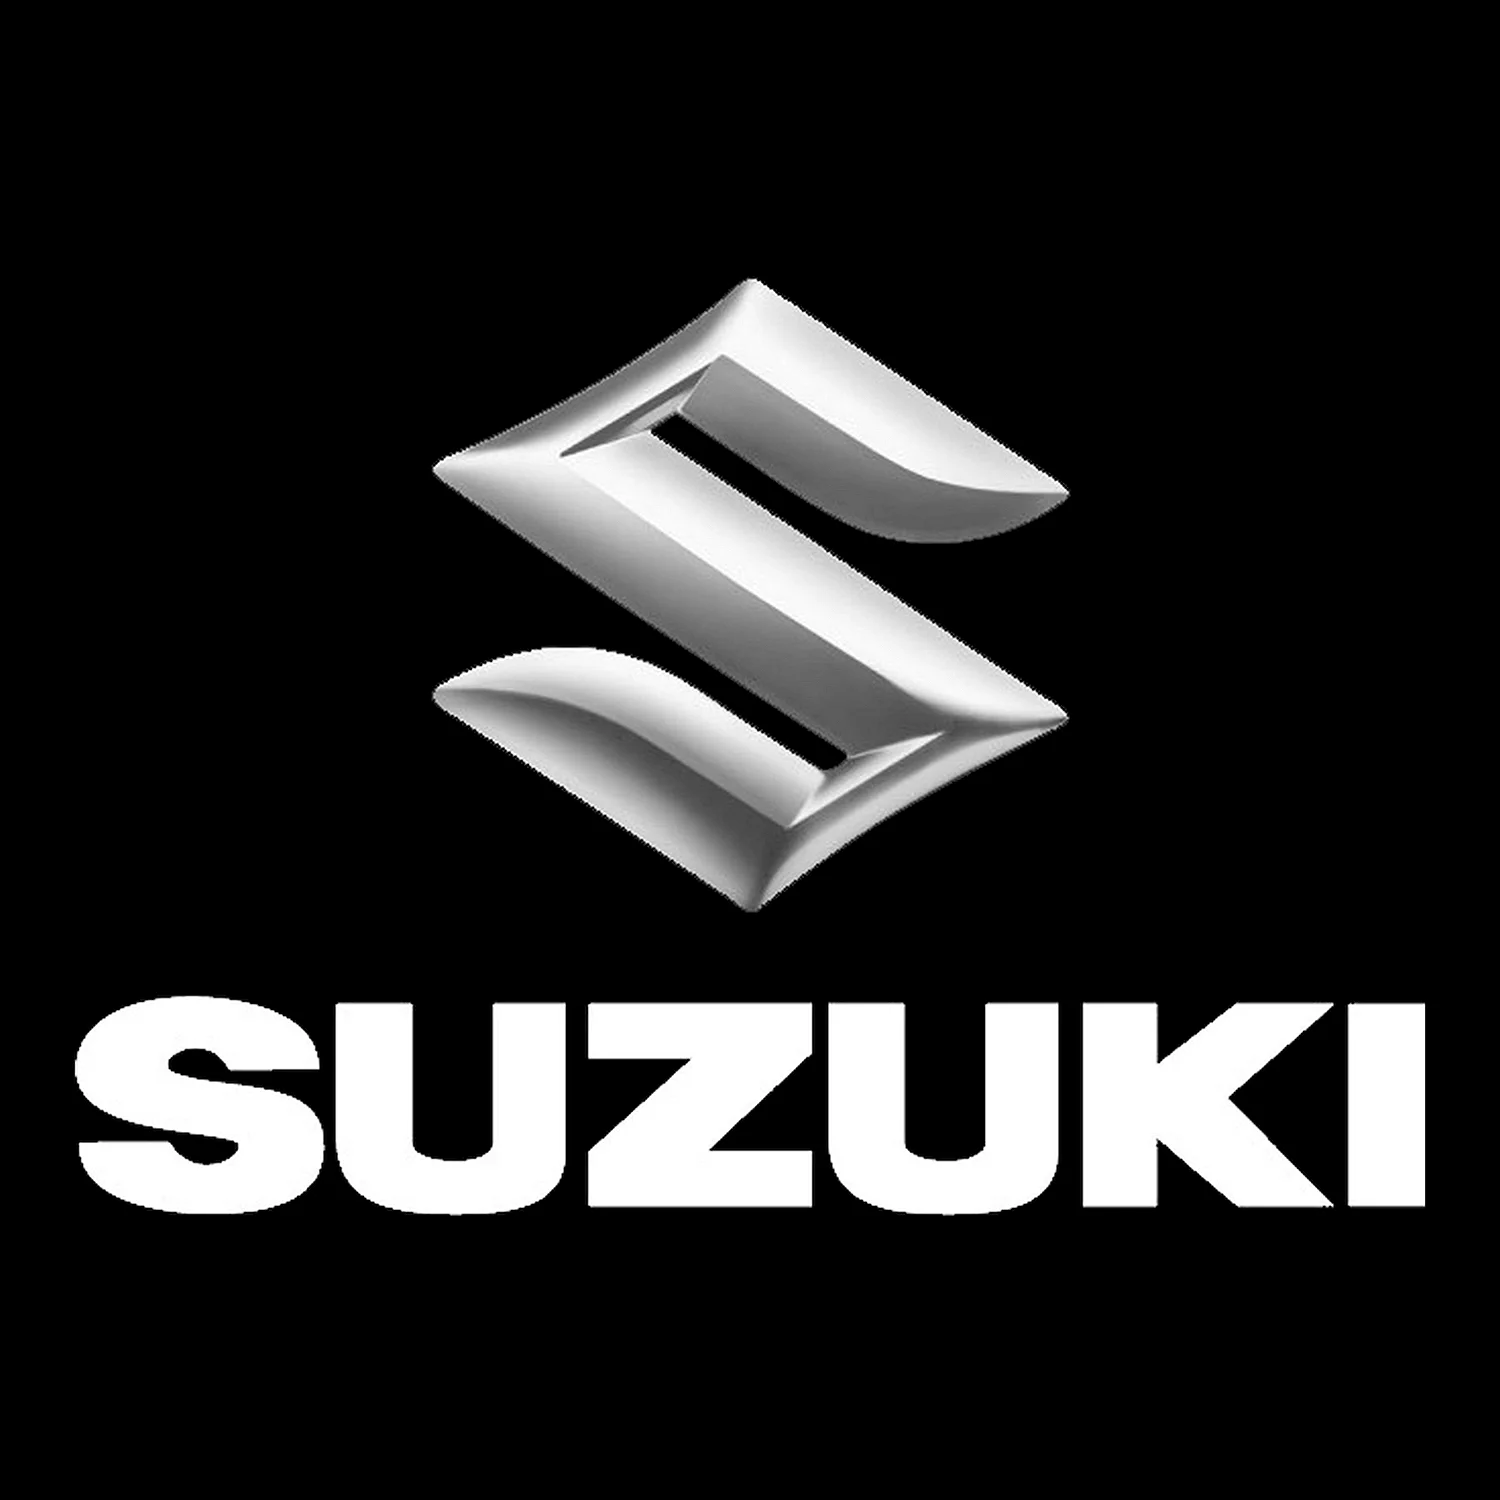 Suzuki Motor logo